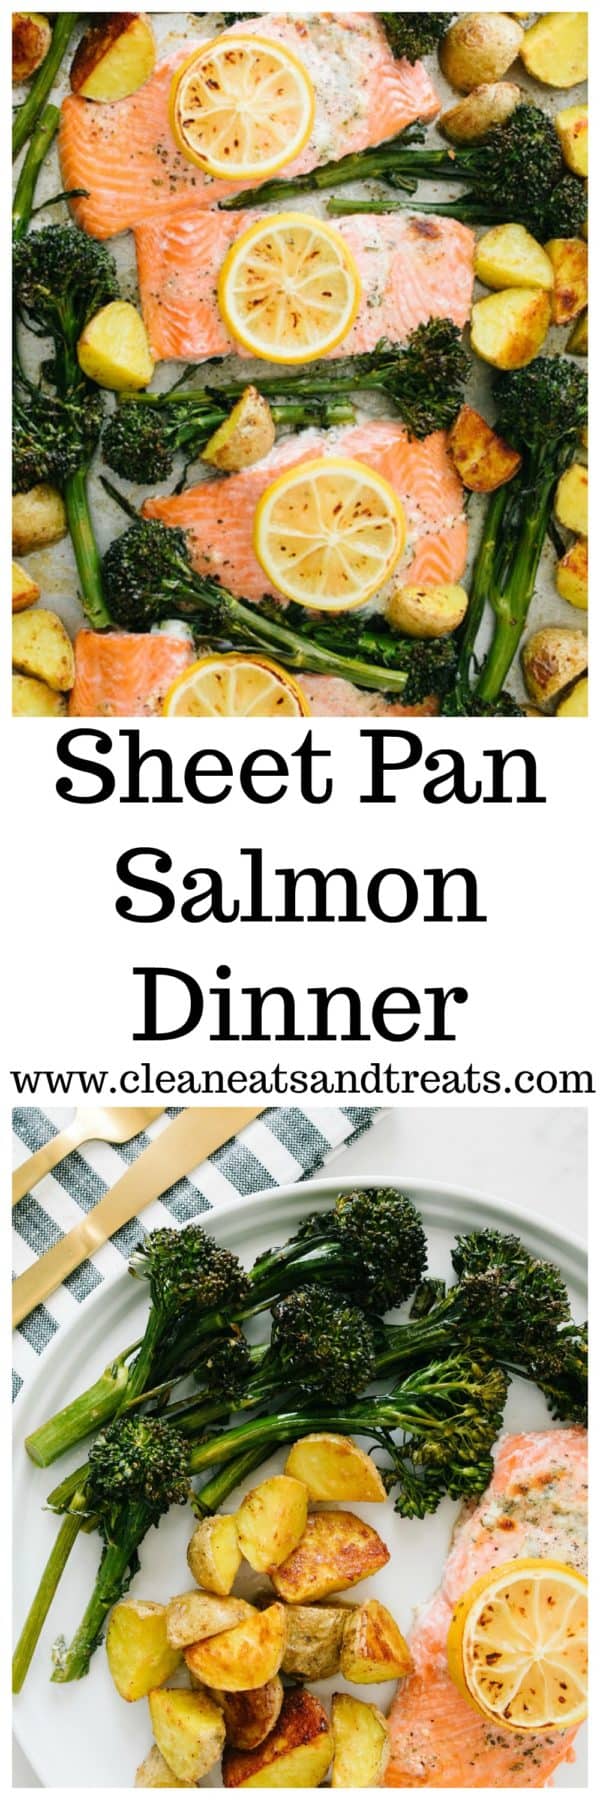 Sheet Pan Salmon Dinner for Four | Clean Eats & Treats